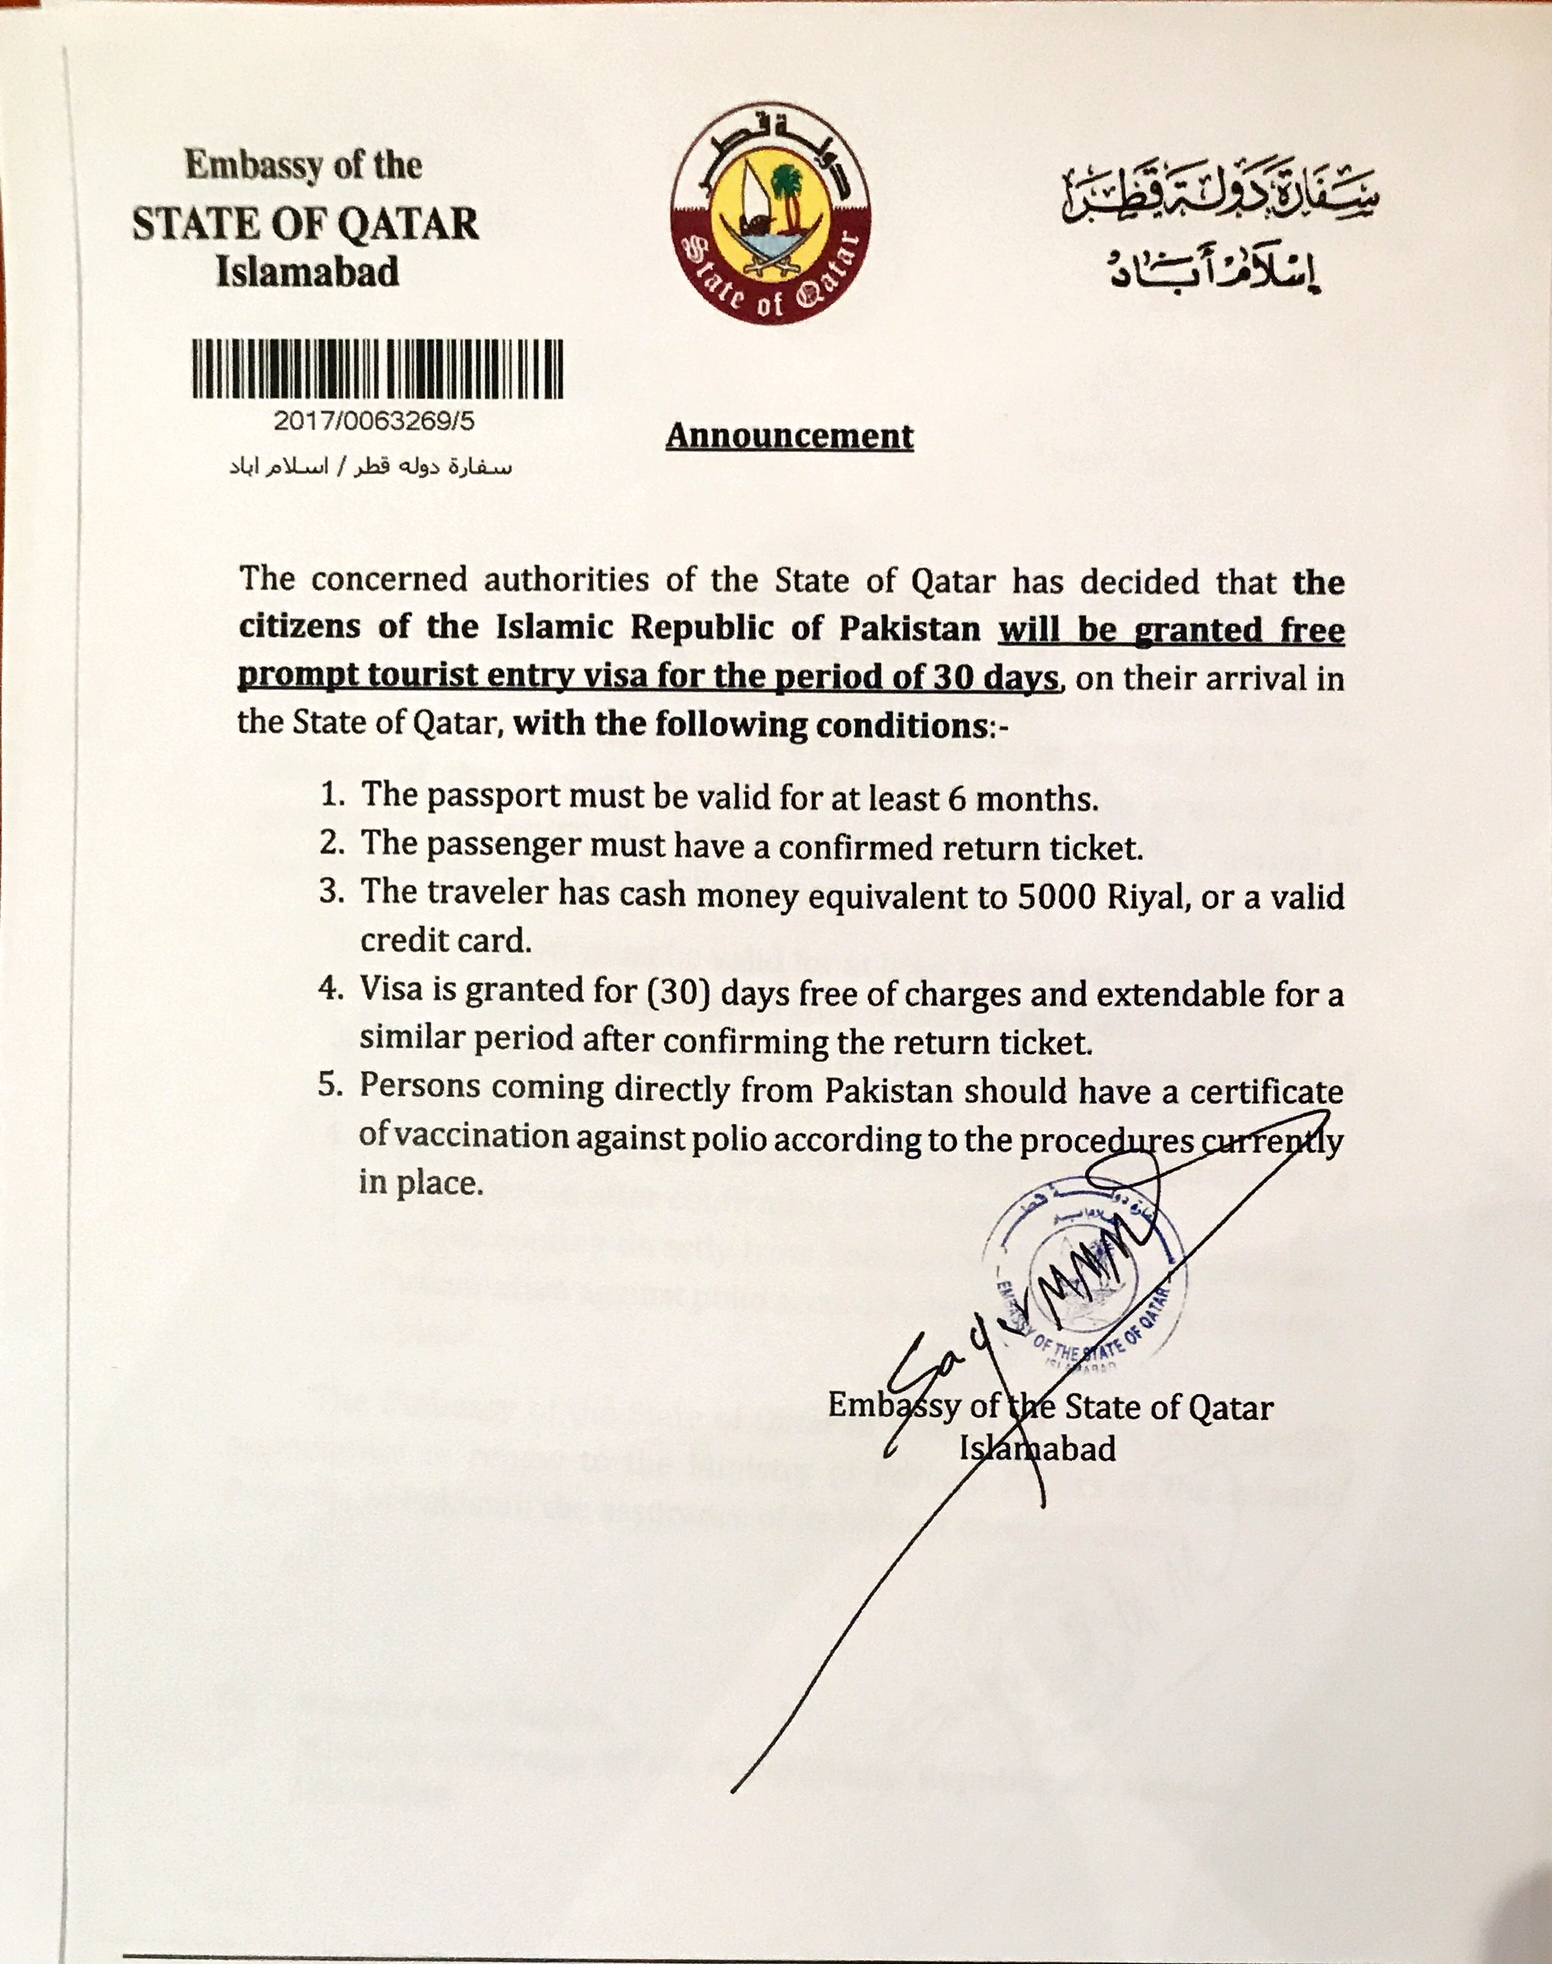 qatar visit visa requirements for pakistan